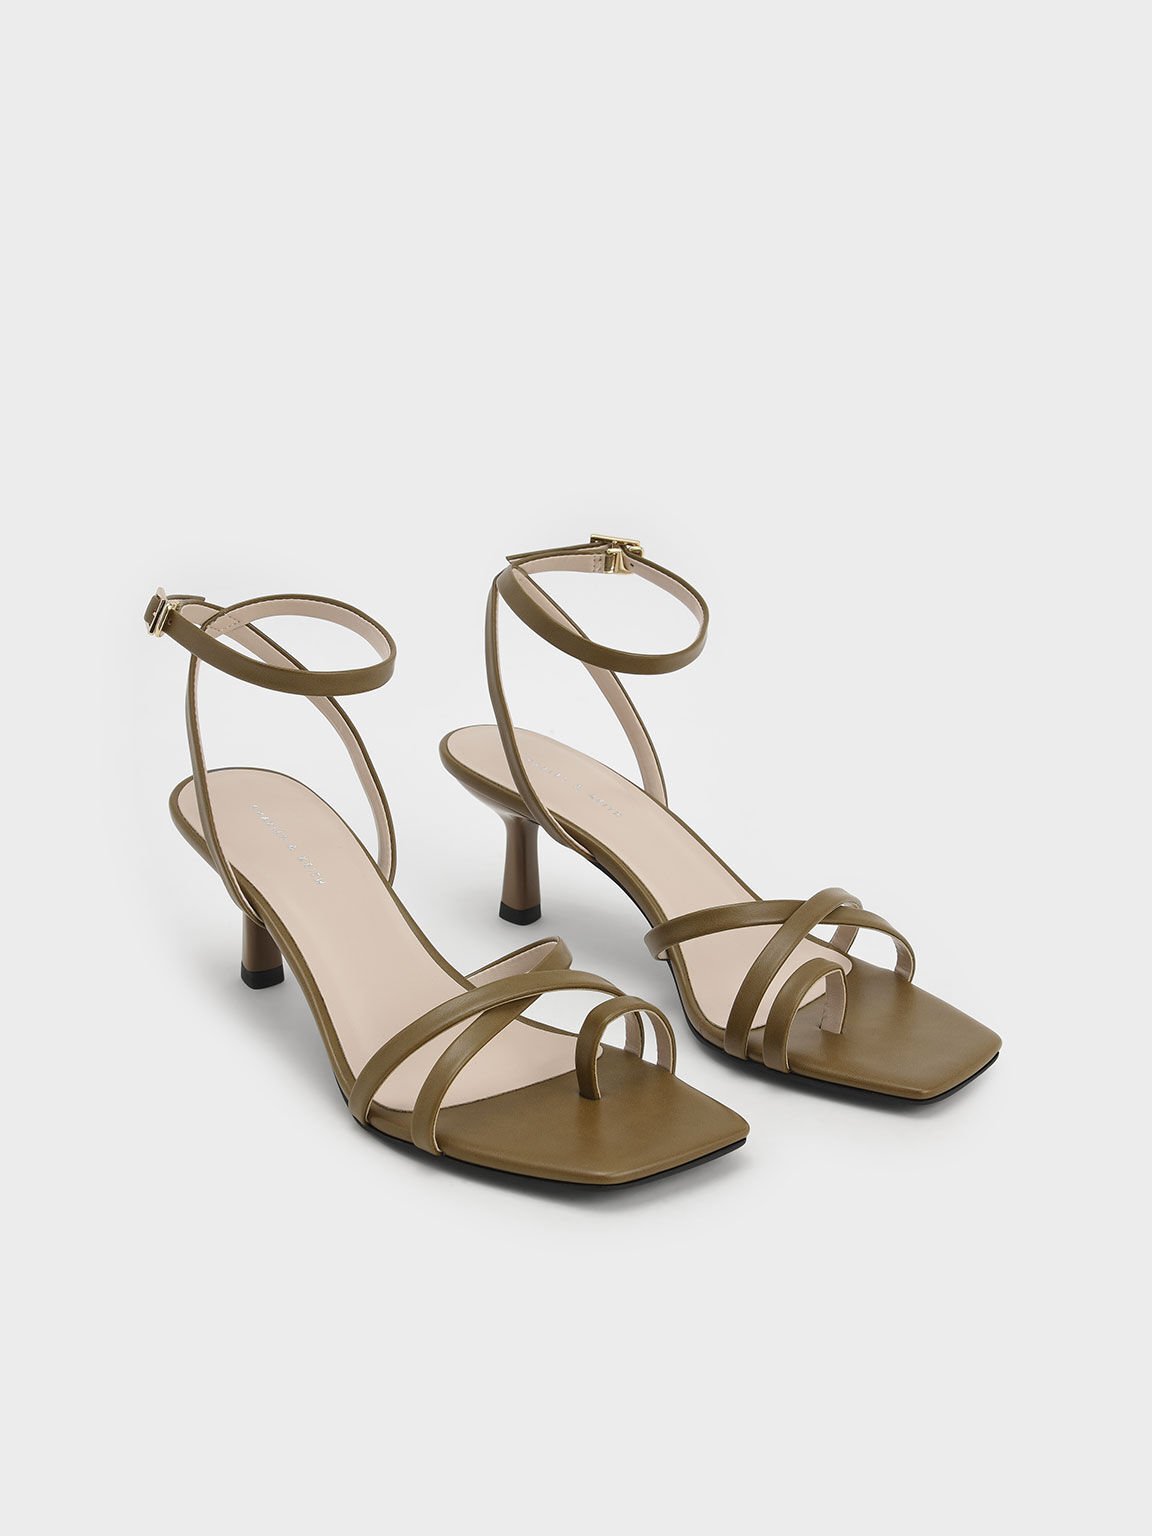 Toe Loop Strappy Heeled Sandals, Olive, hi-res